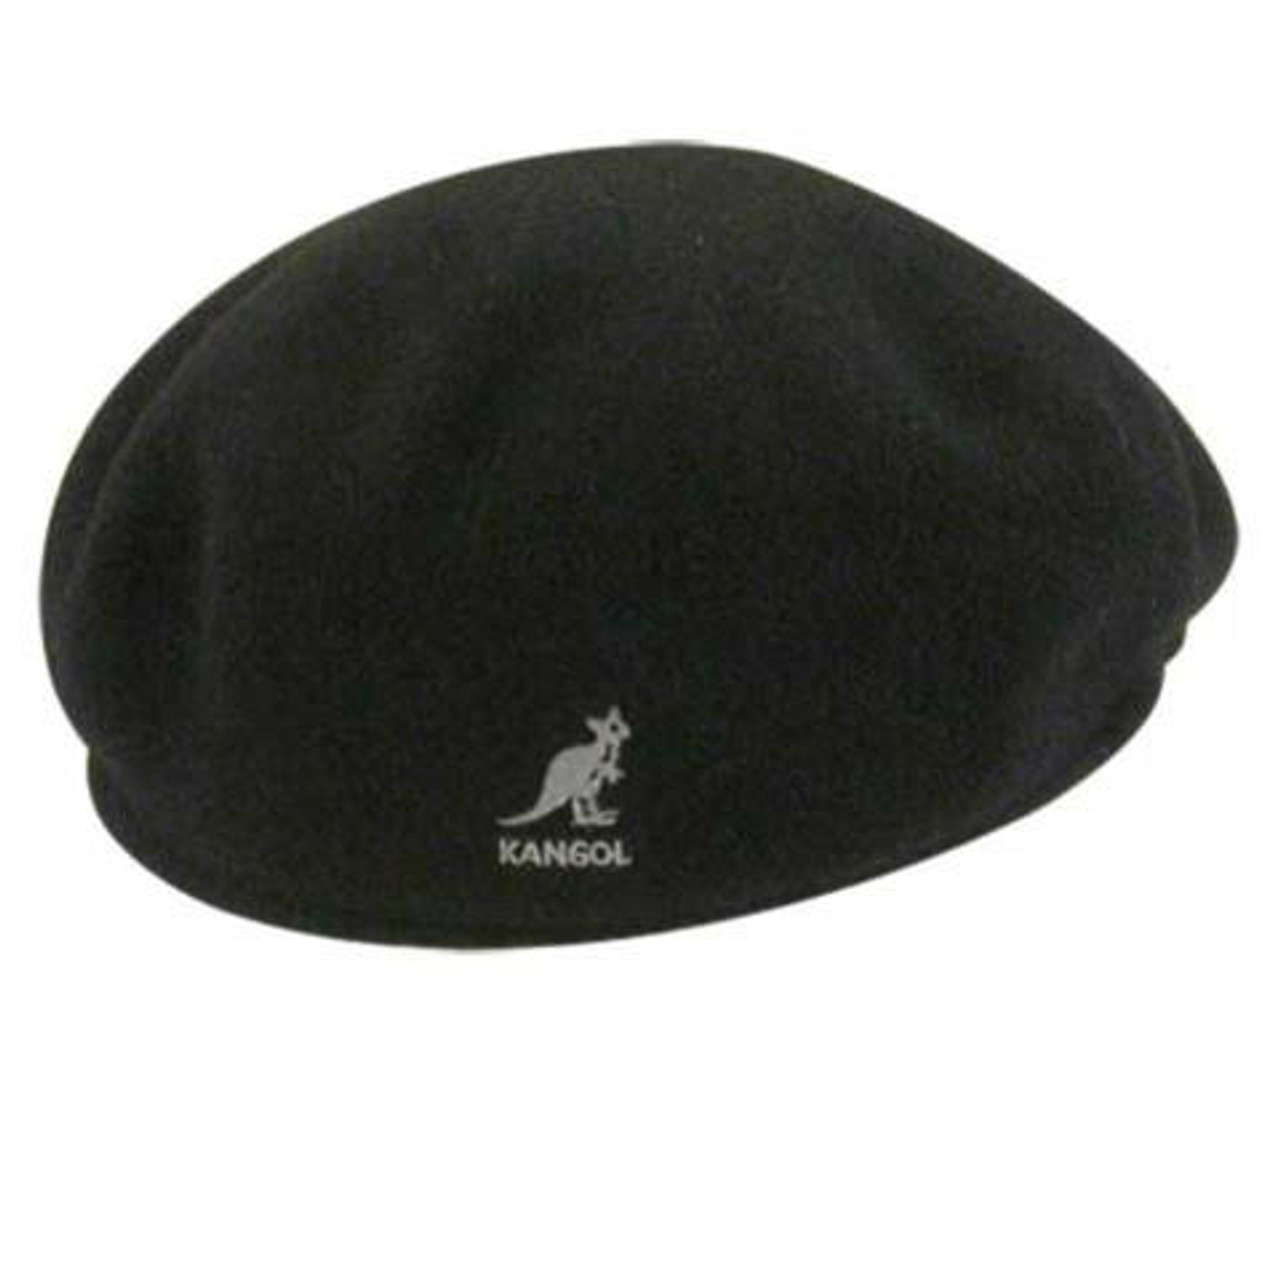 Kangol Hats Mens Black 100% Wool 504 Hat Size S, XL